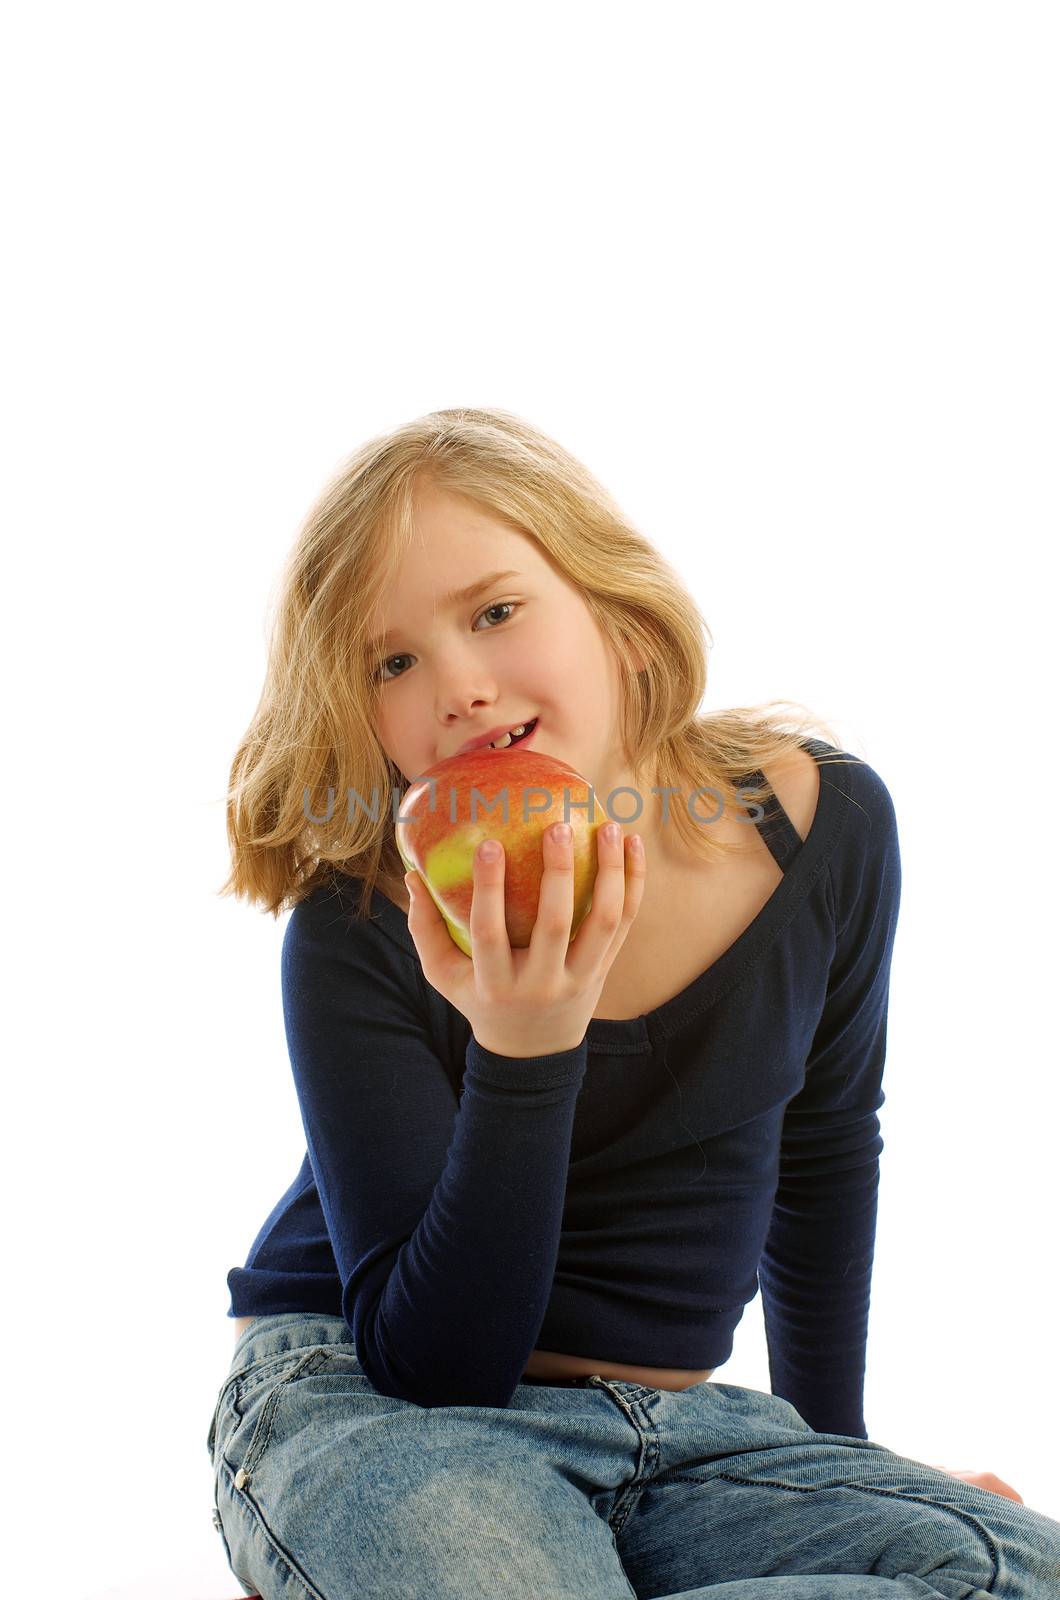 Girl Eating an Apple by zhekos